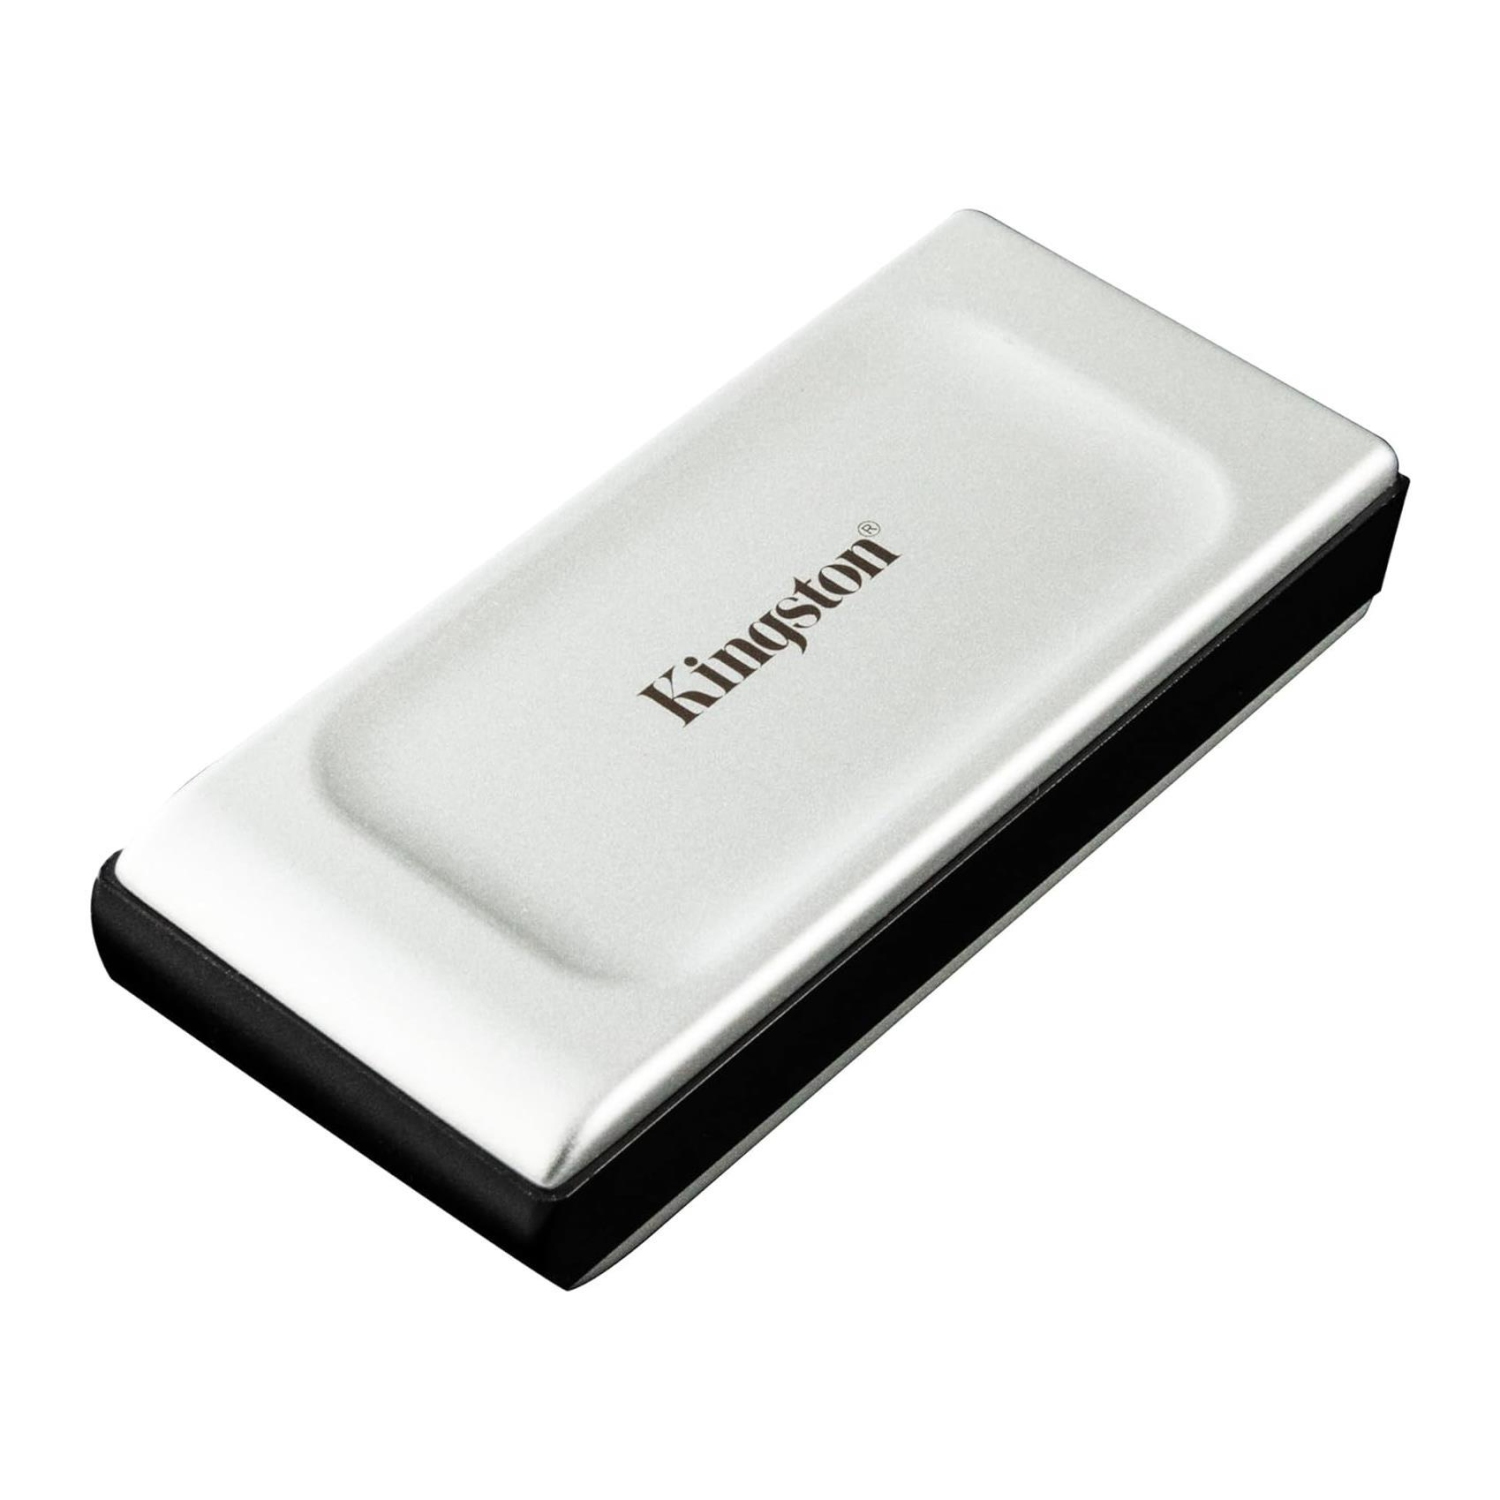 Refurbished (Good) Kingston XS2000 500G High Performance Pocket-Sized USB External SSD